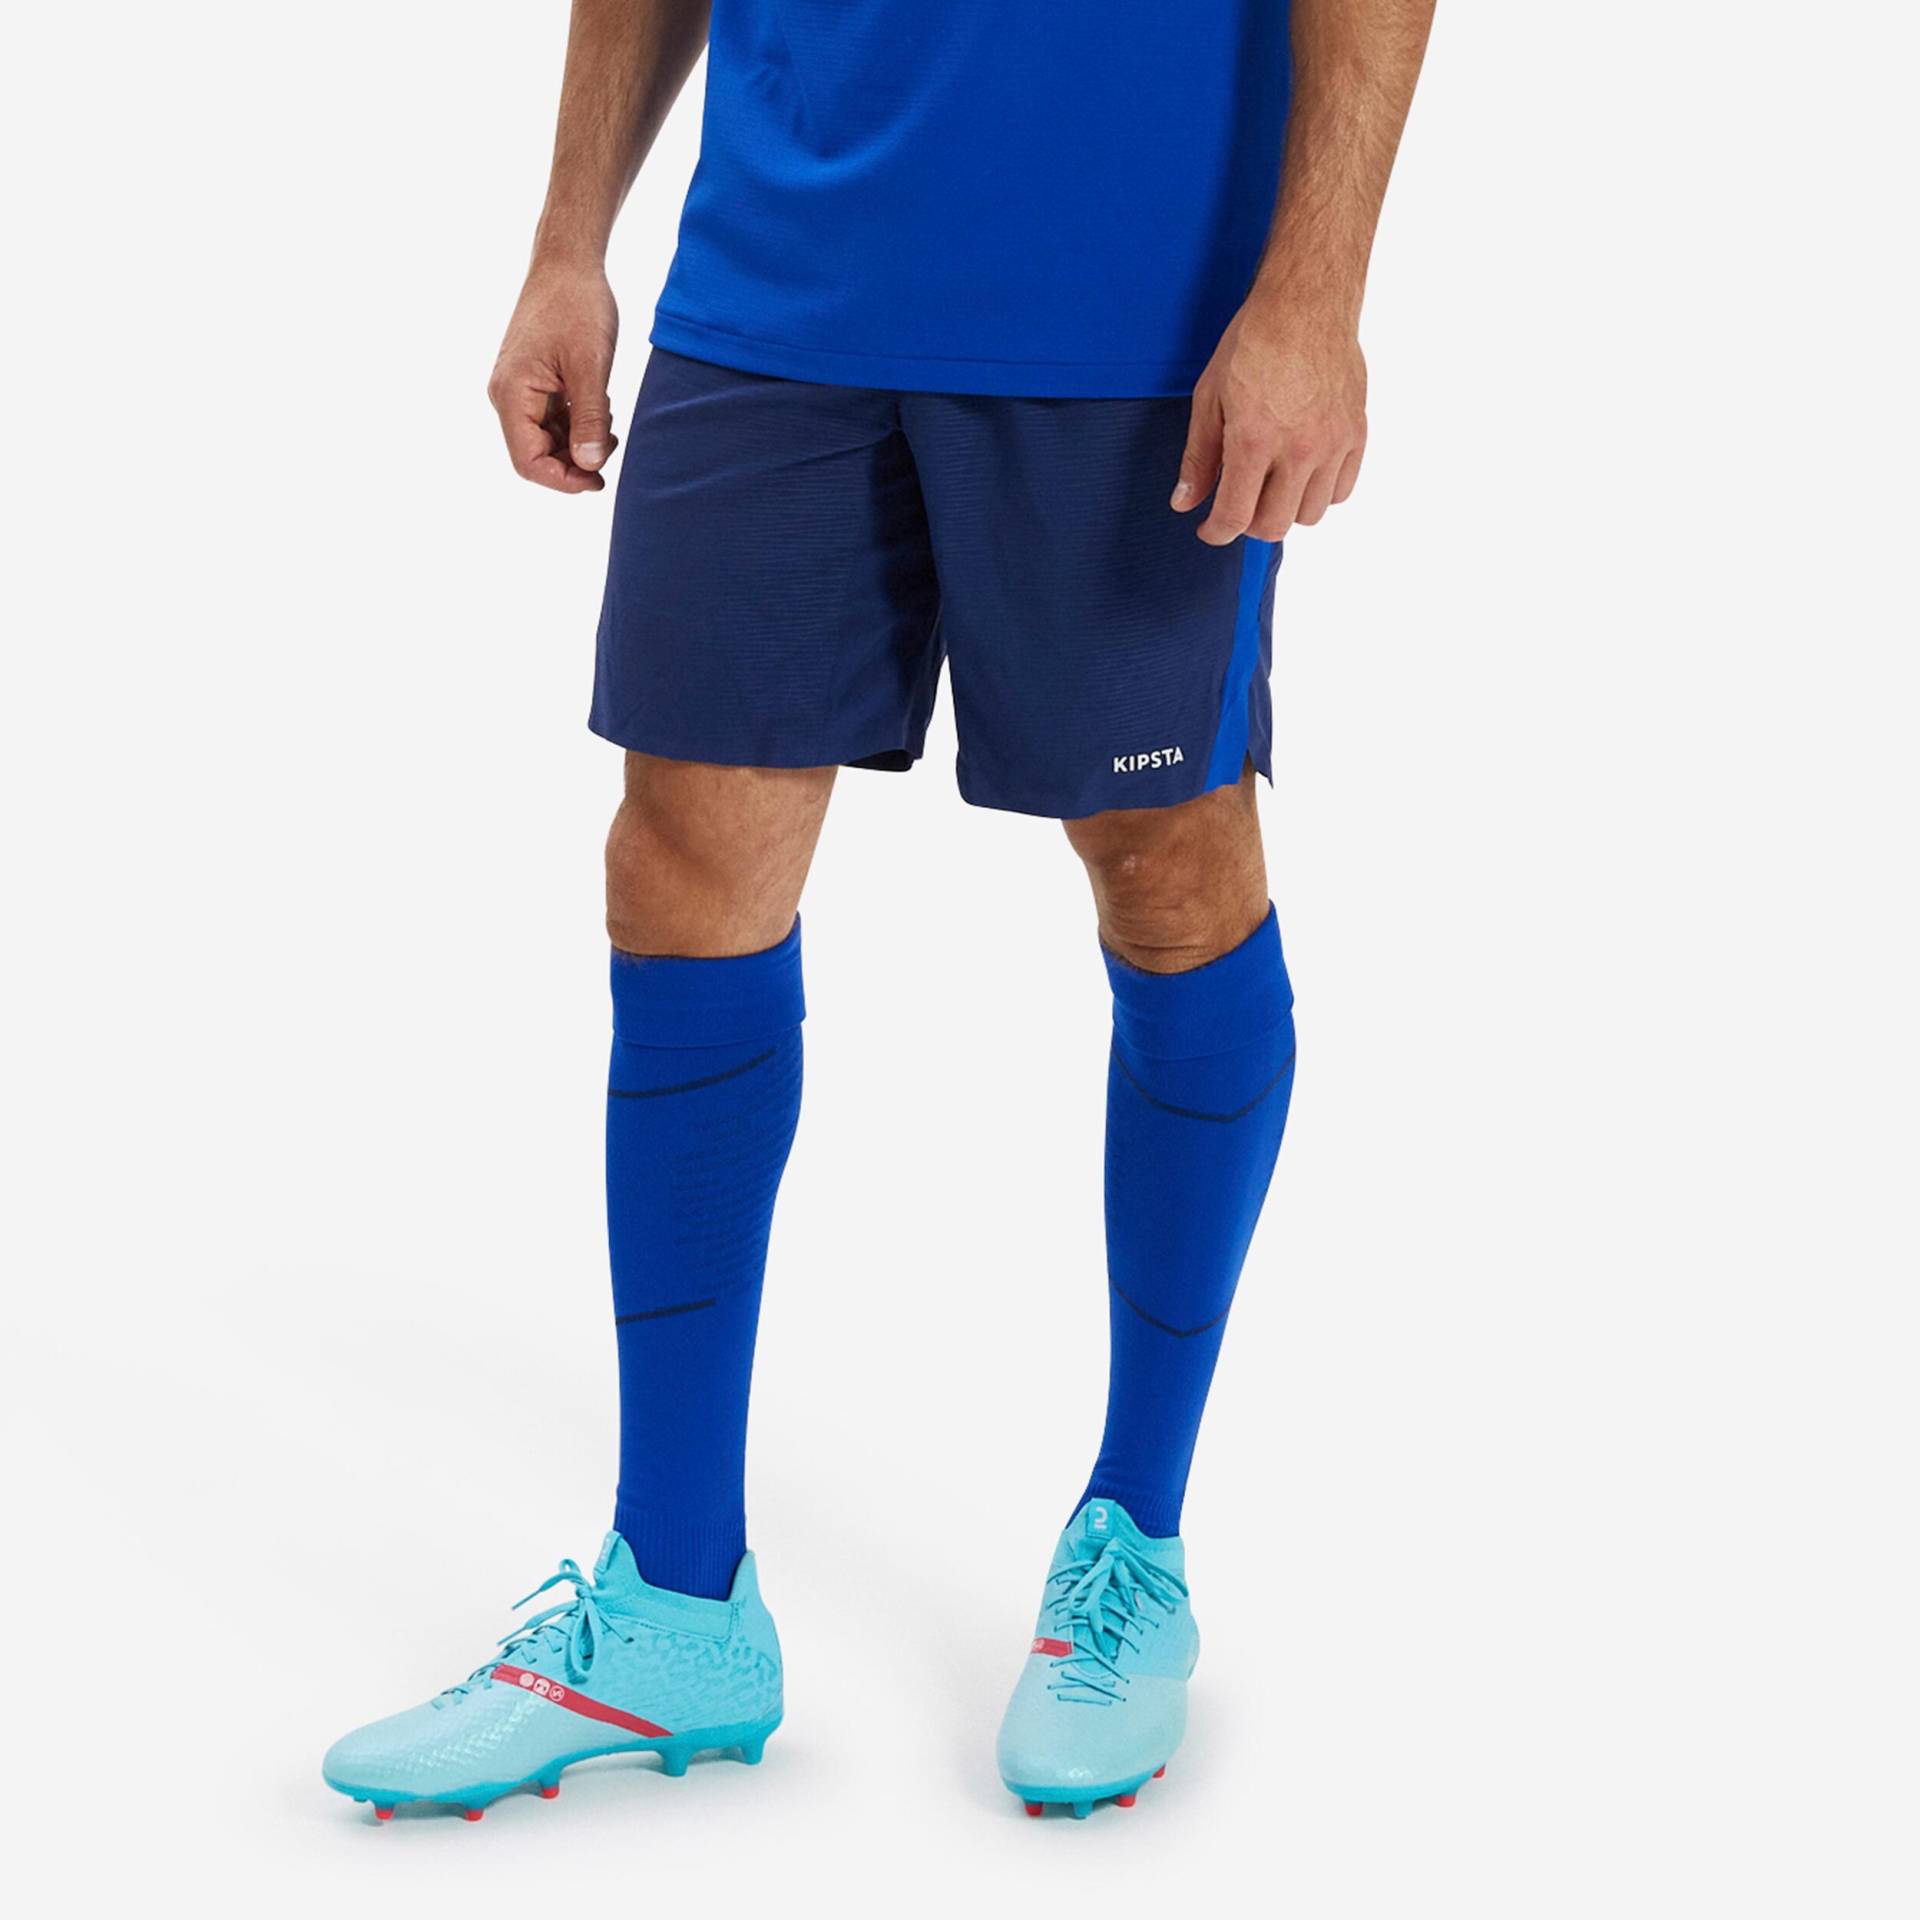 Damen/Herren Fussball Shorts - CLR marineblau/blau von KIPSTA